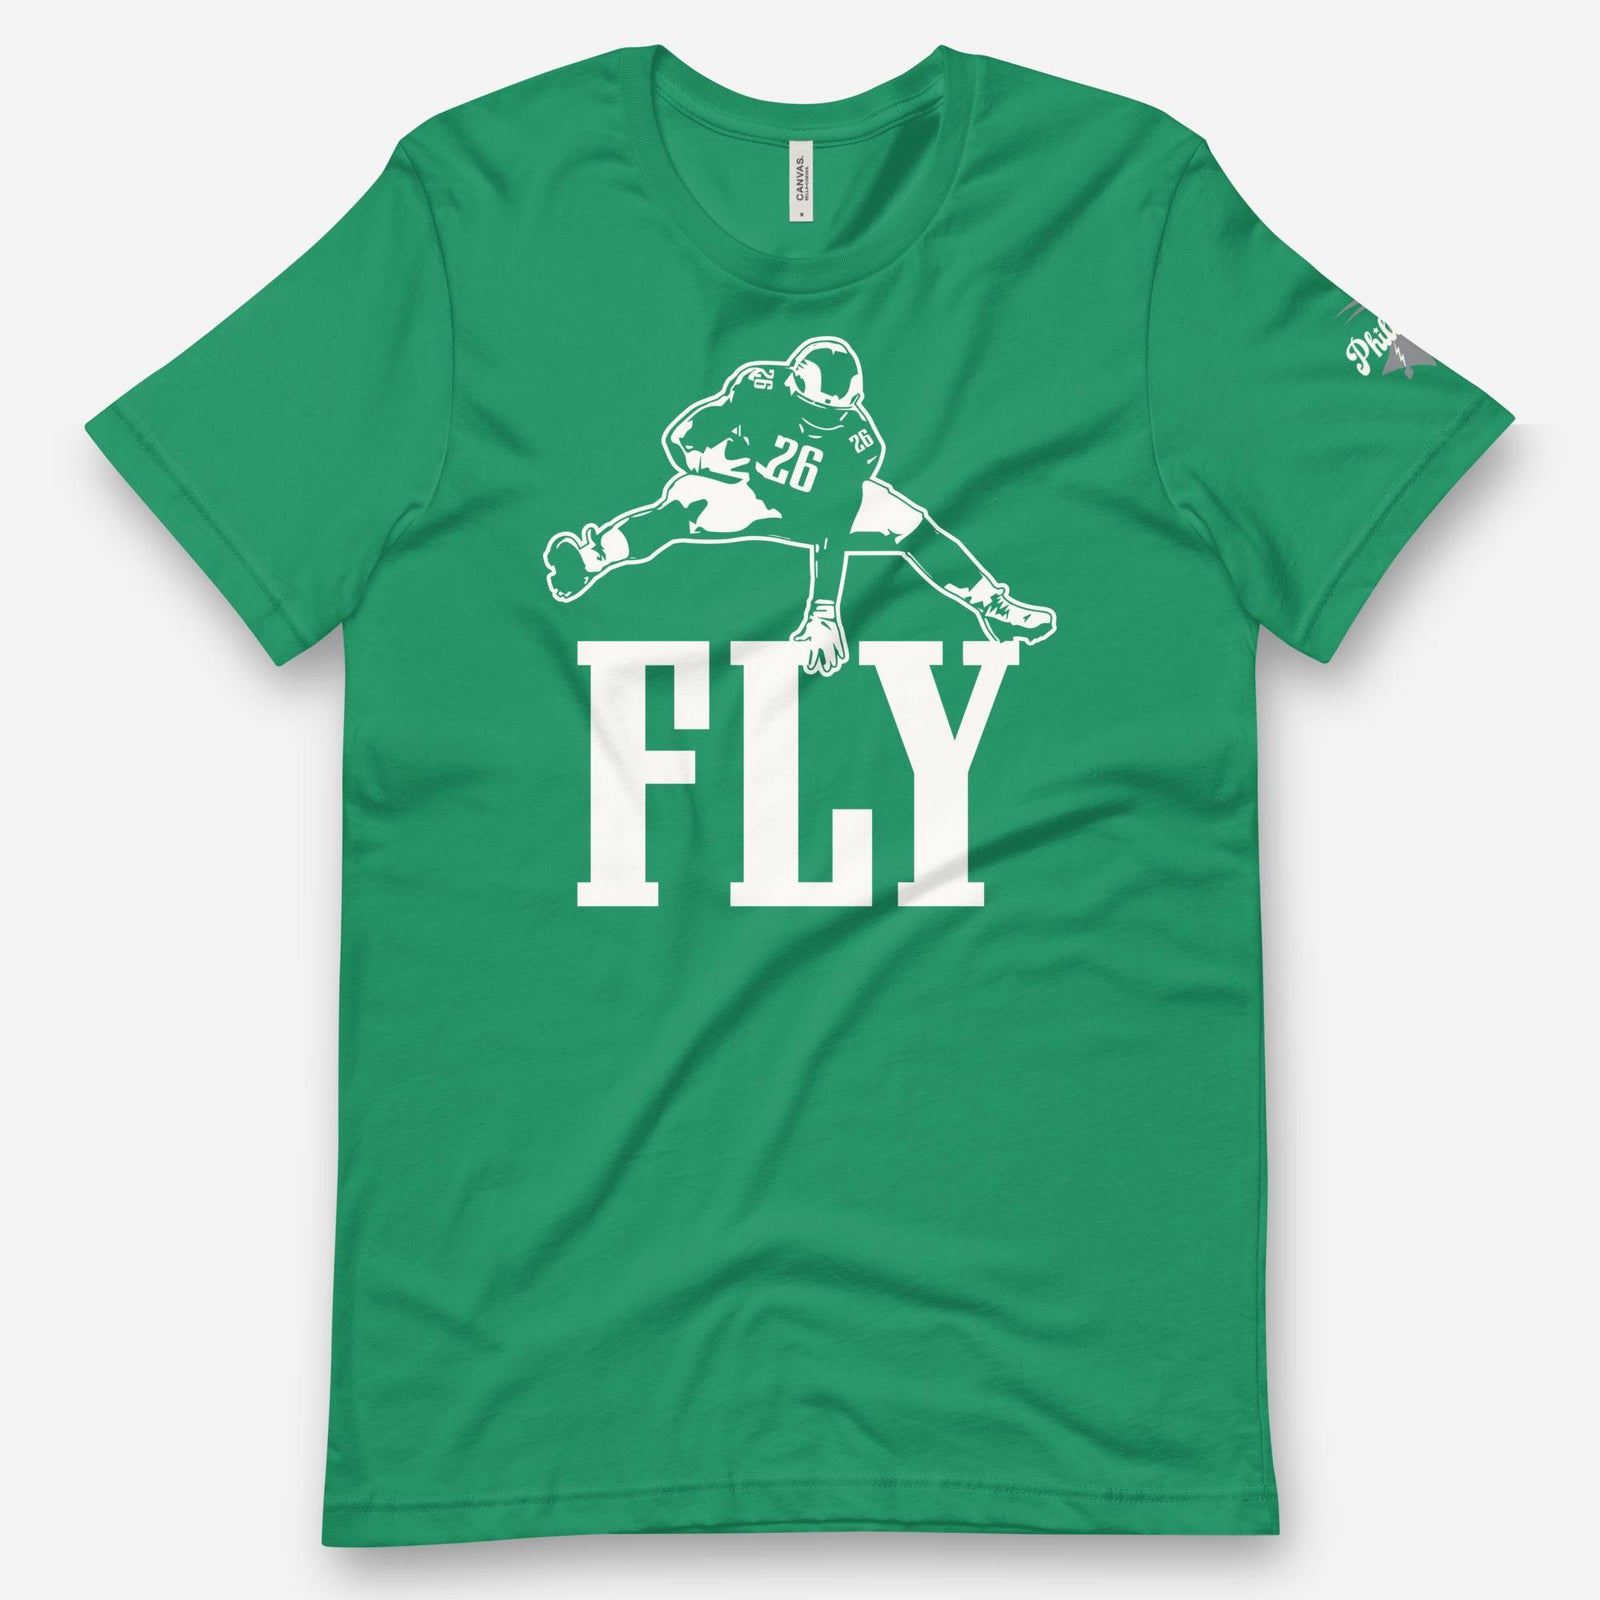 "Flyquon" Tee